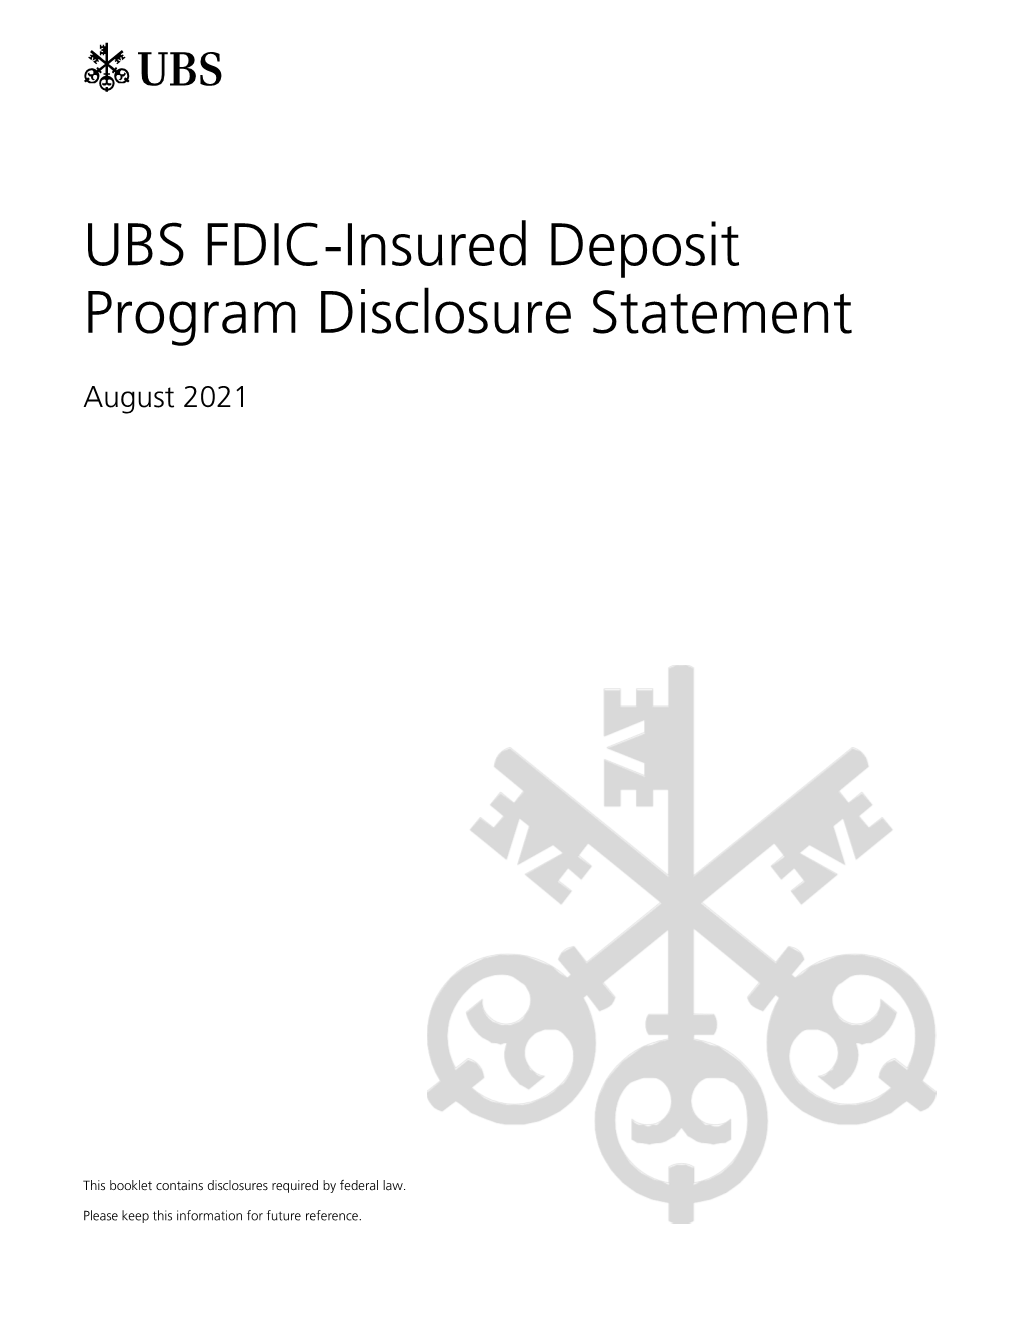 UBS FDIC-Insured Deposit Program Disclosure Statement